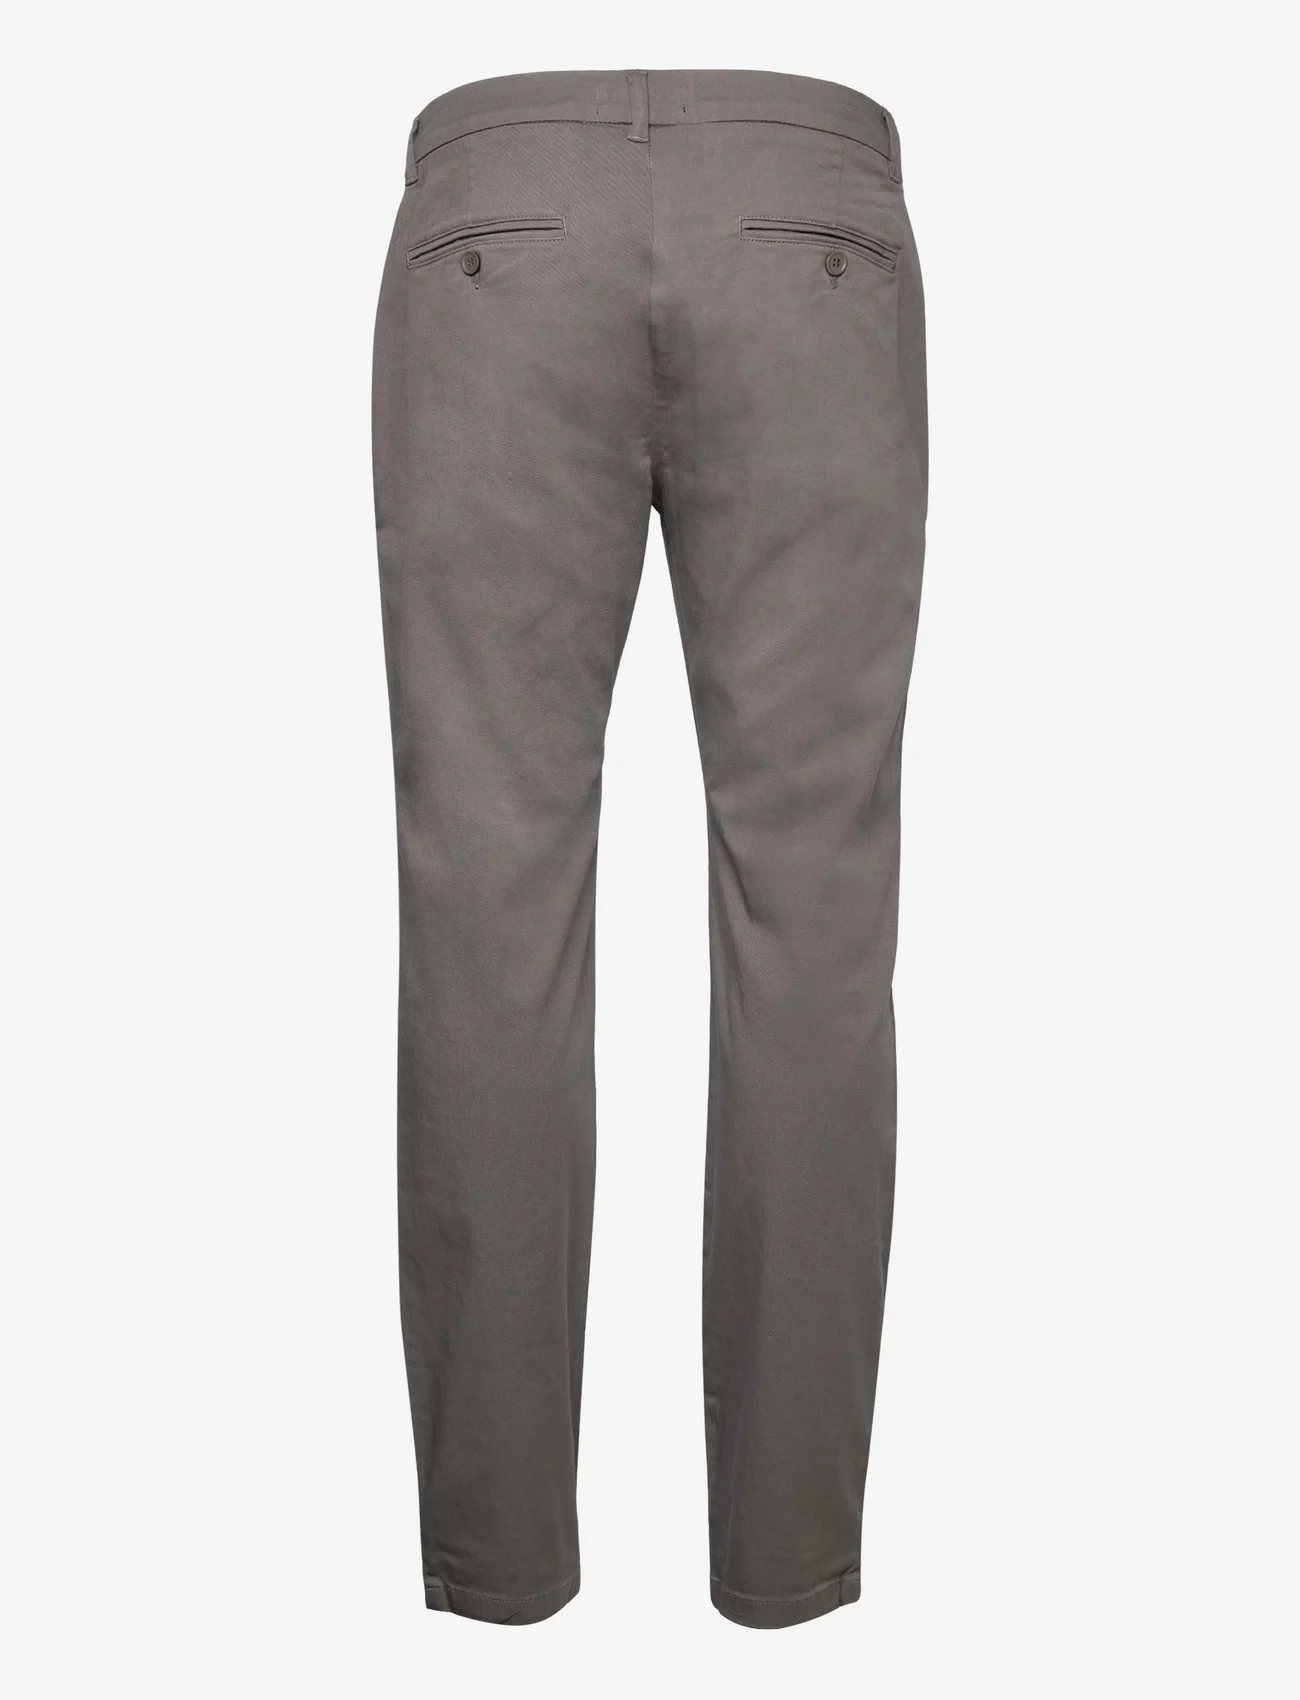 Bruuns Bazaar - Dennis Johansen pants - grey mist - 1